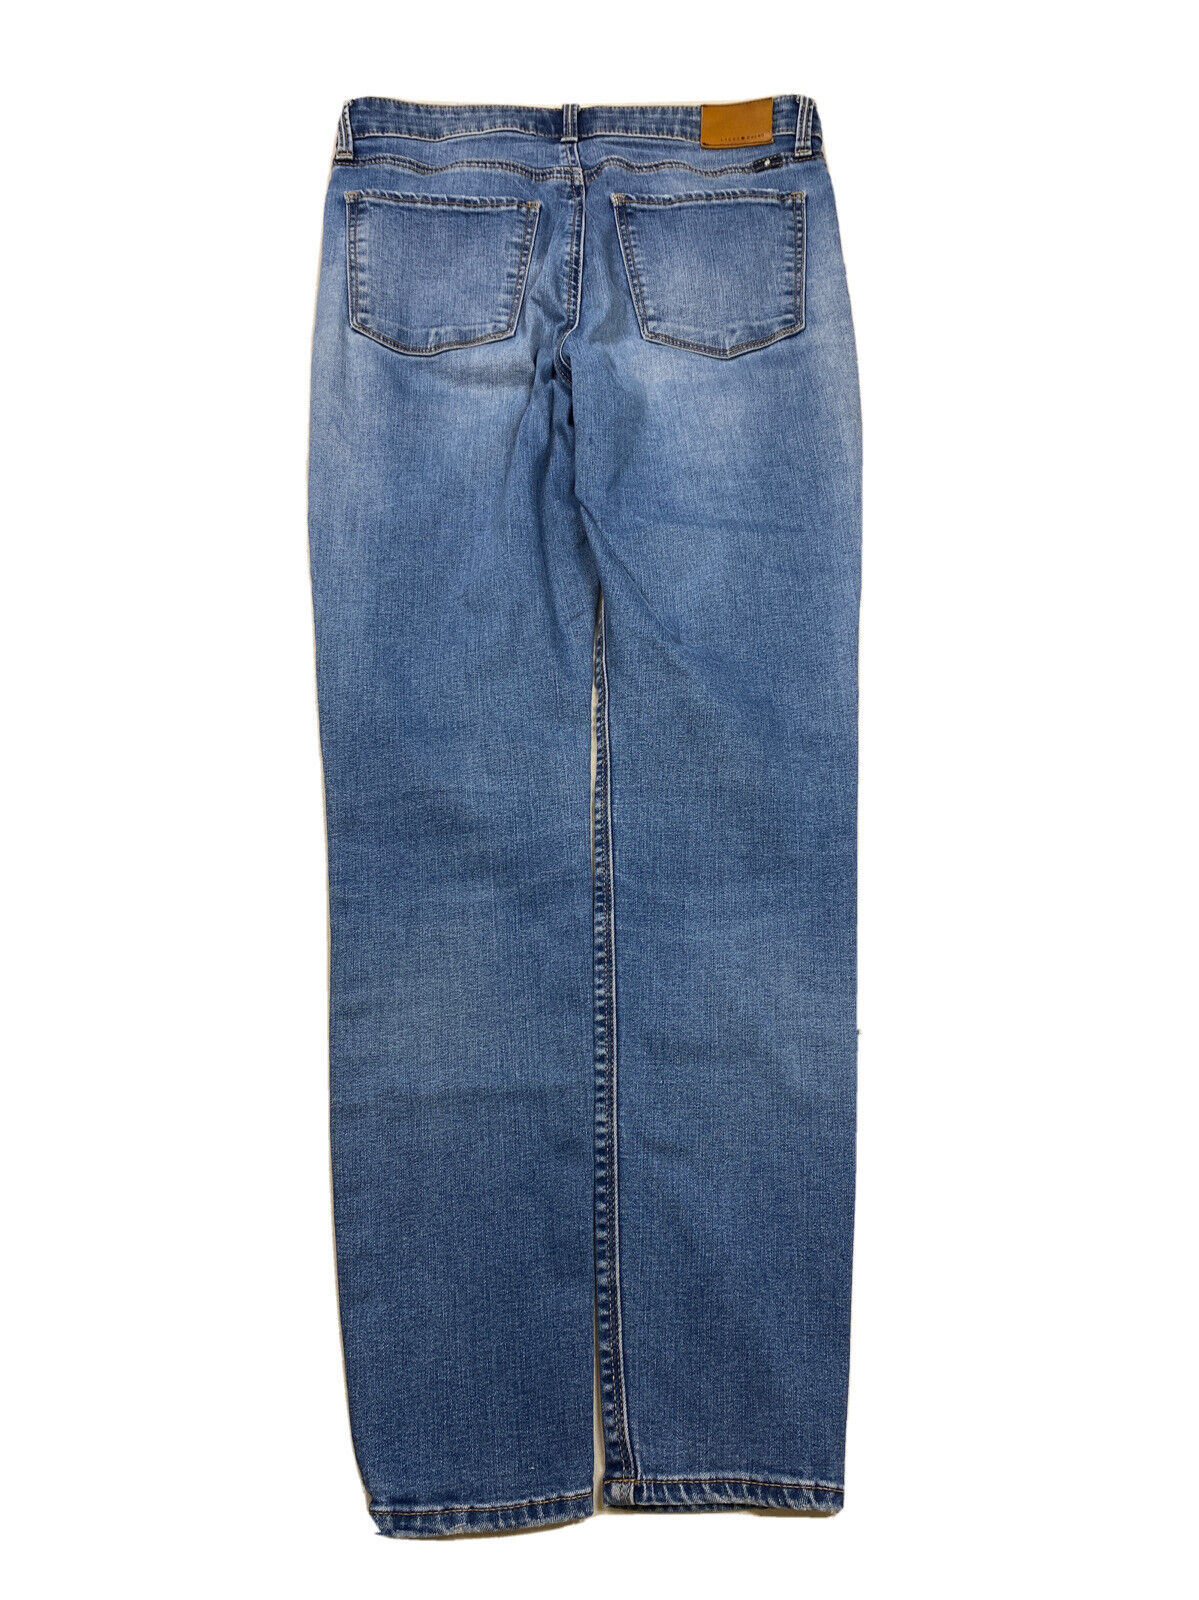 Lucky Brand Women's Light Wash Bridgette Skinny Denim Jeans - 6/28